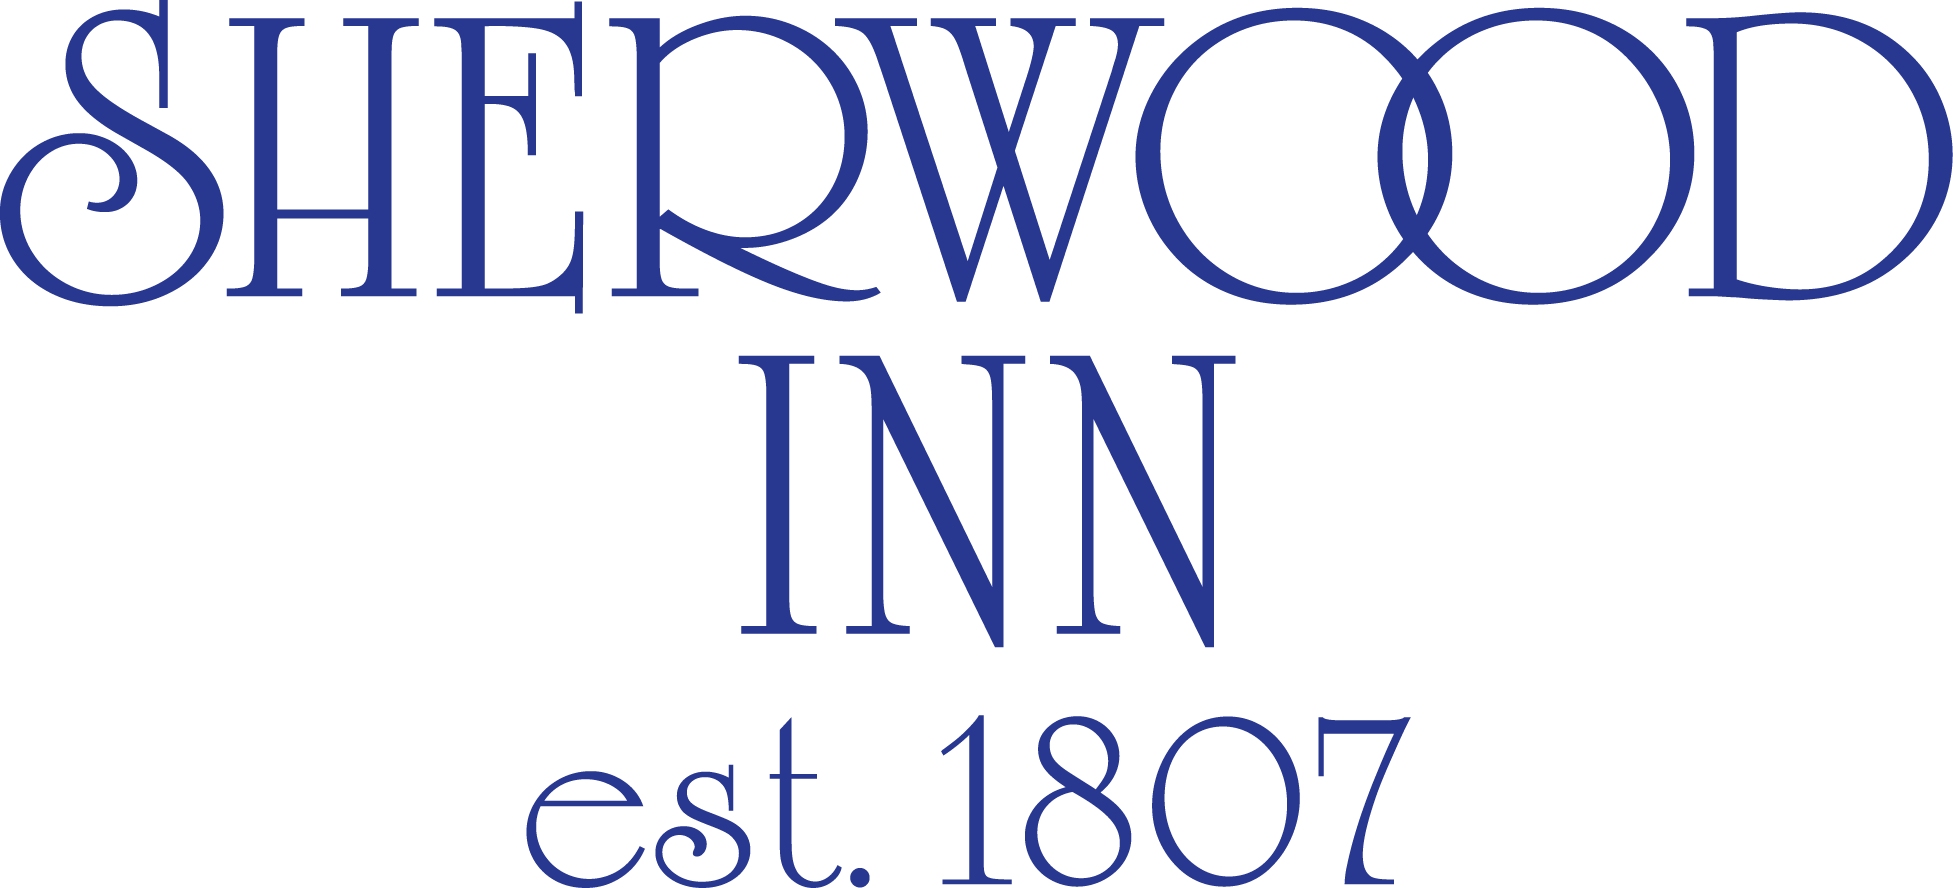 The Sherwood Inn